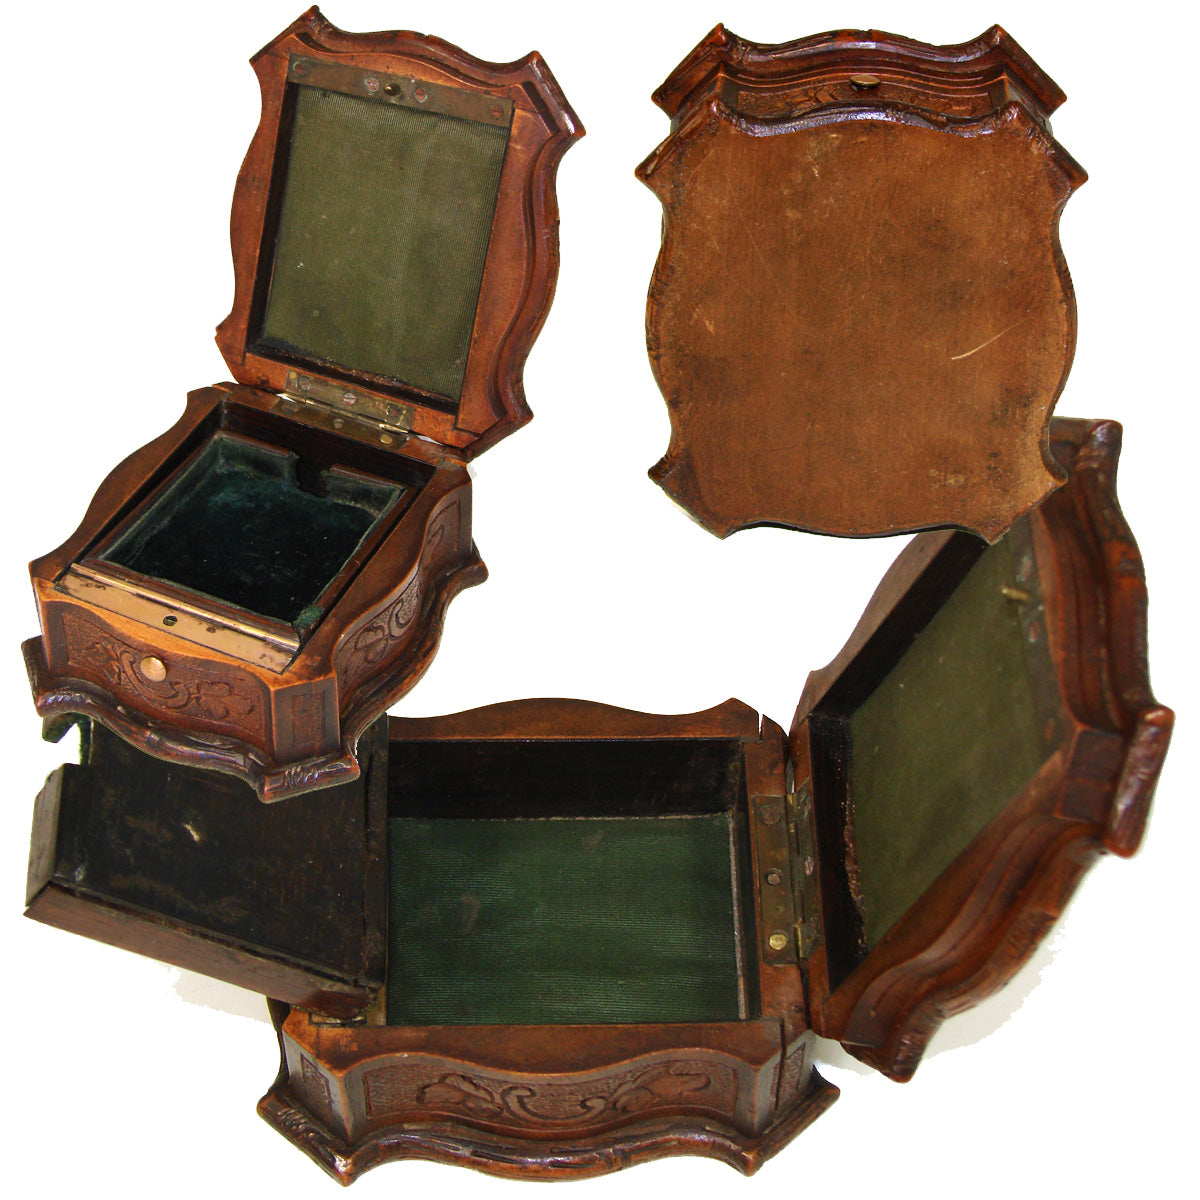 Antique HC Black Forest Pocket Watch Display Box, Elaborate Fine Floral Bouquet